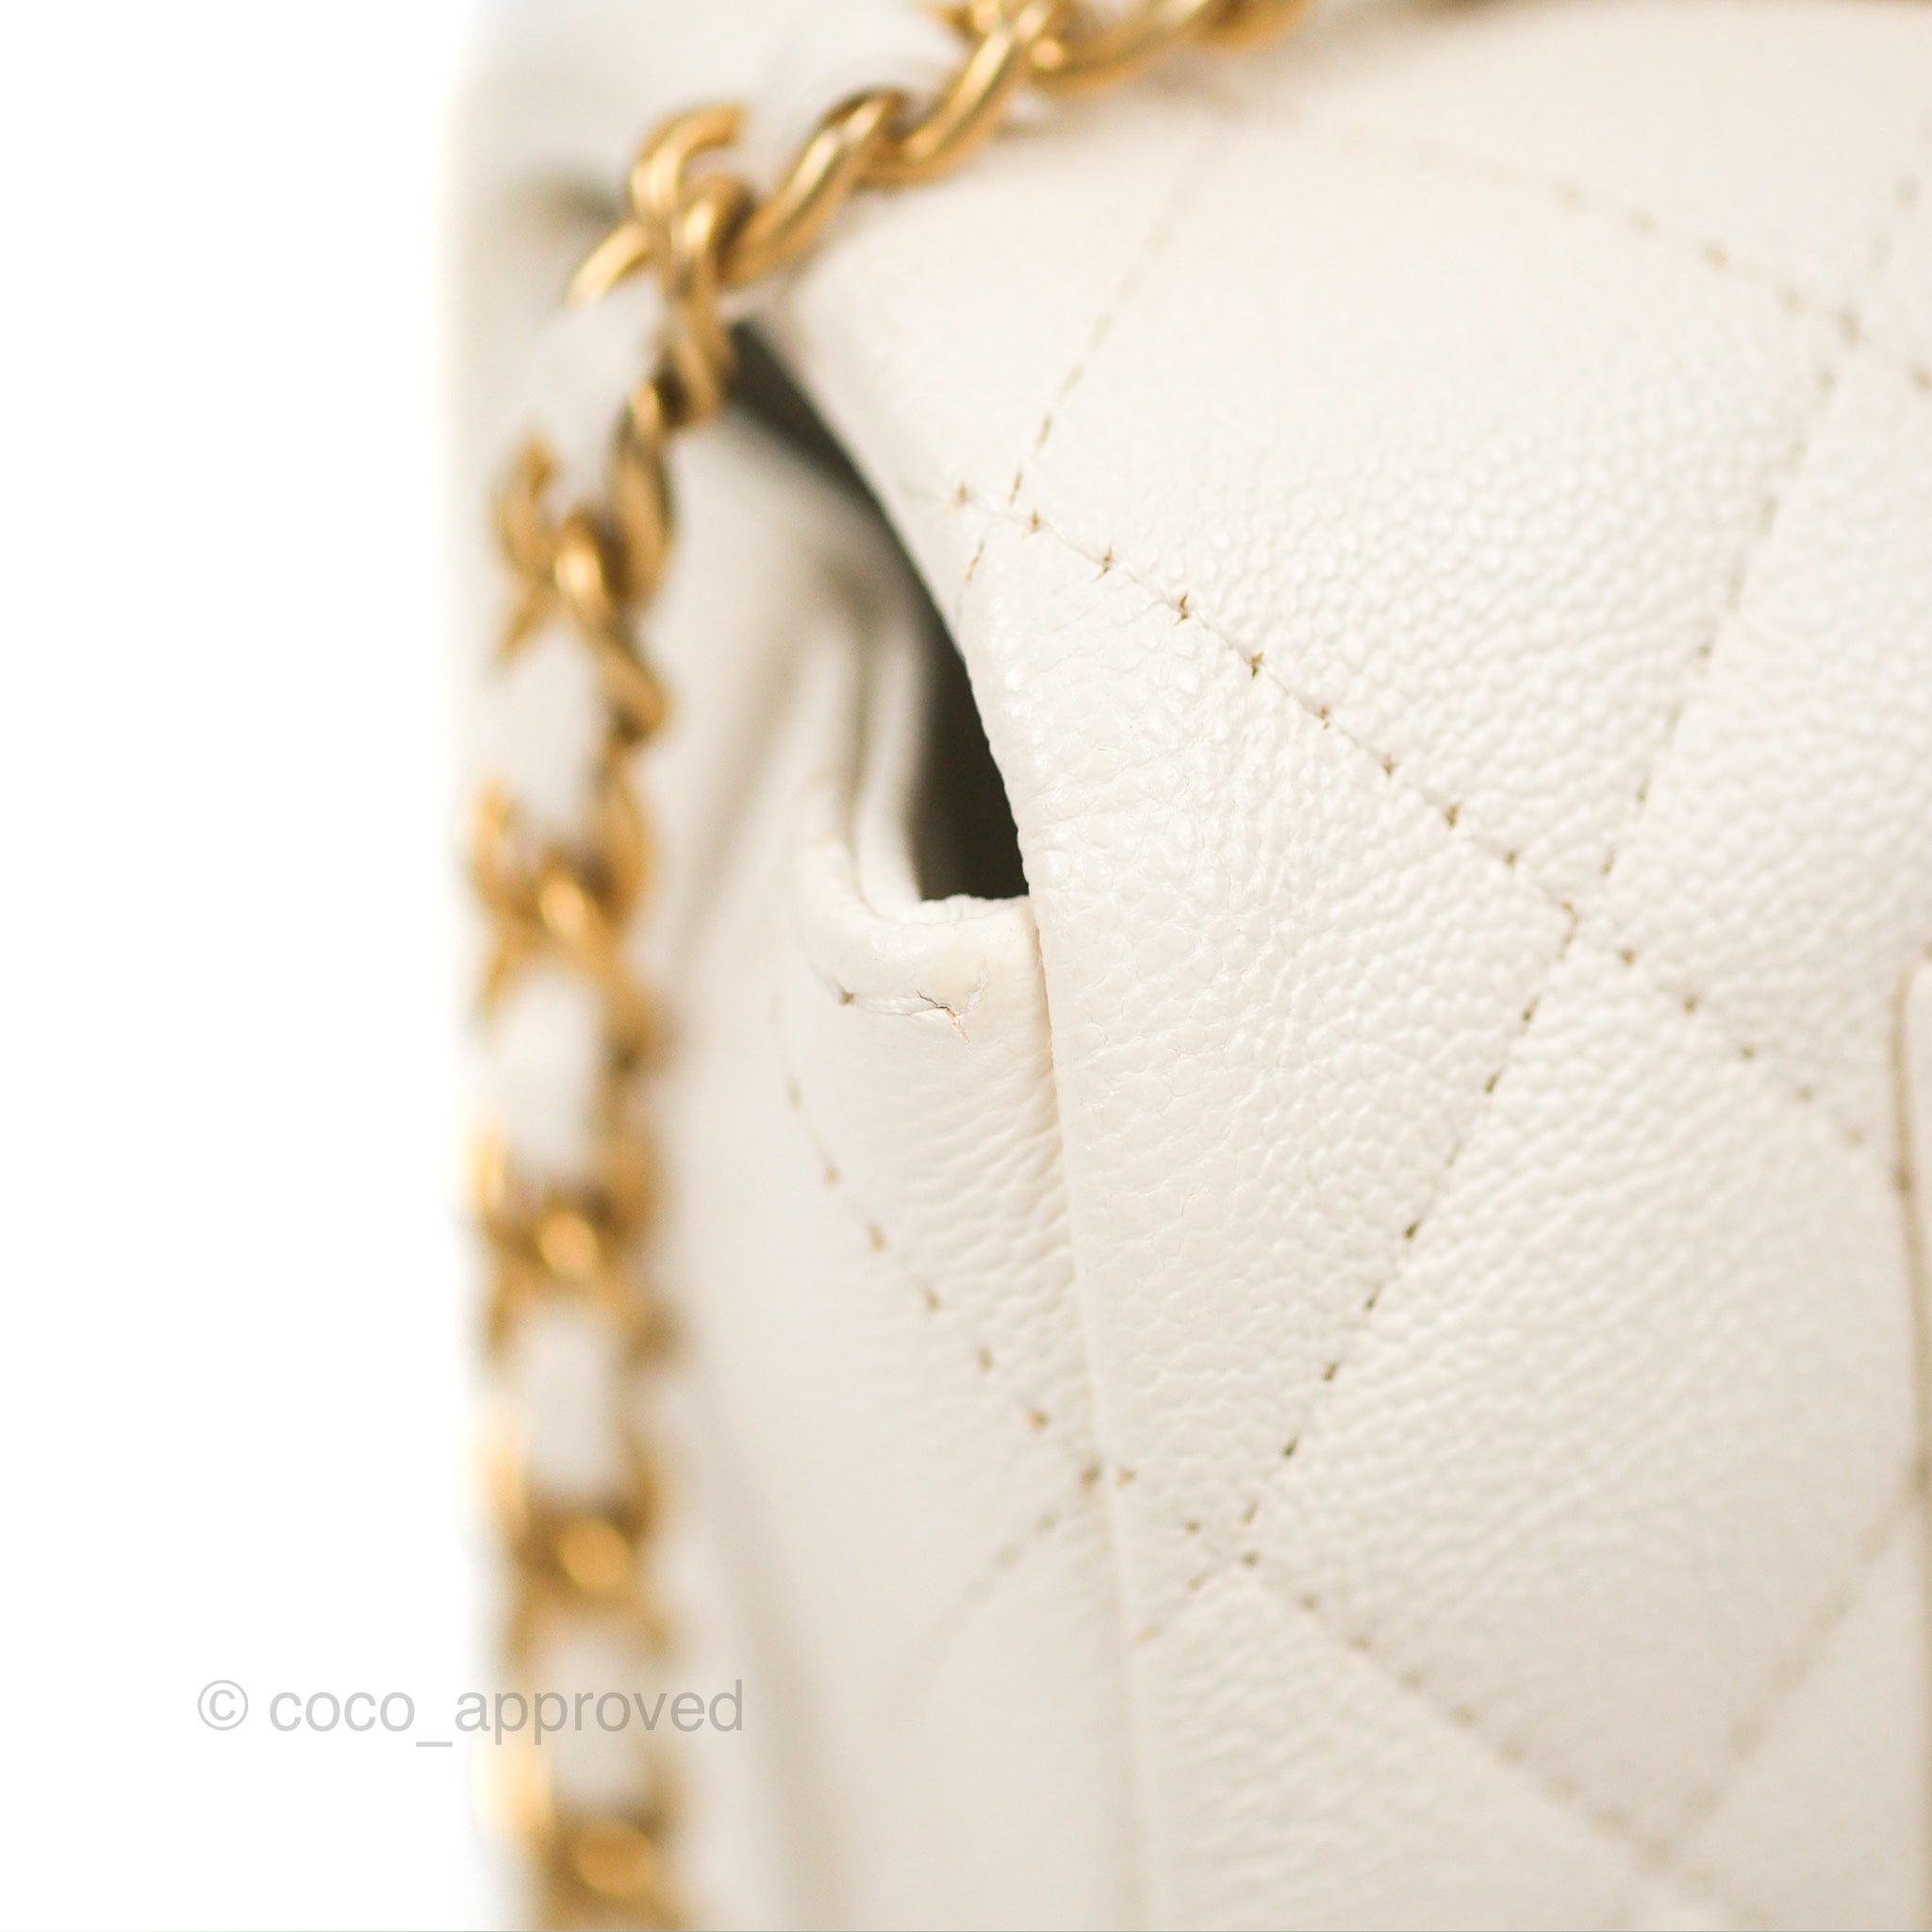 Chanel Top Handle Mini Rectangular Flap Bag White Caviar Aged Gold